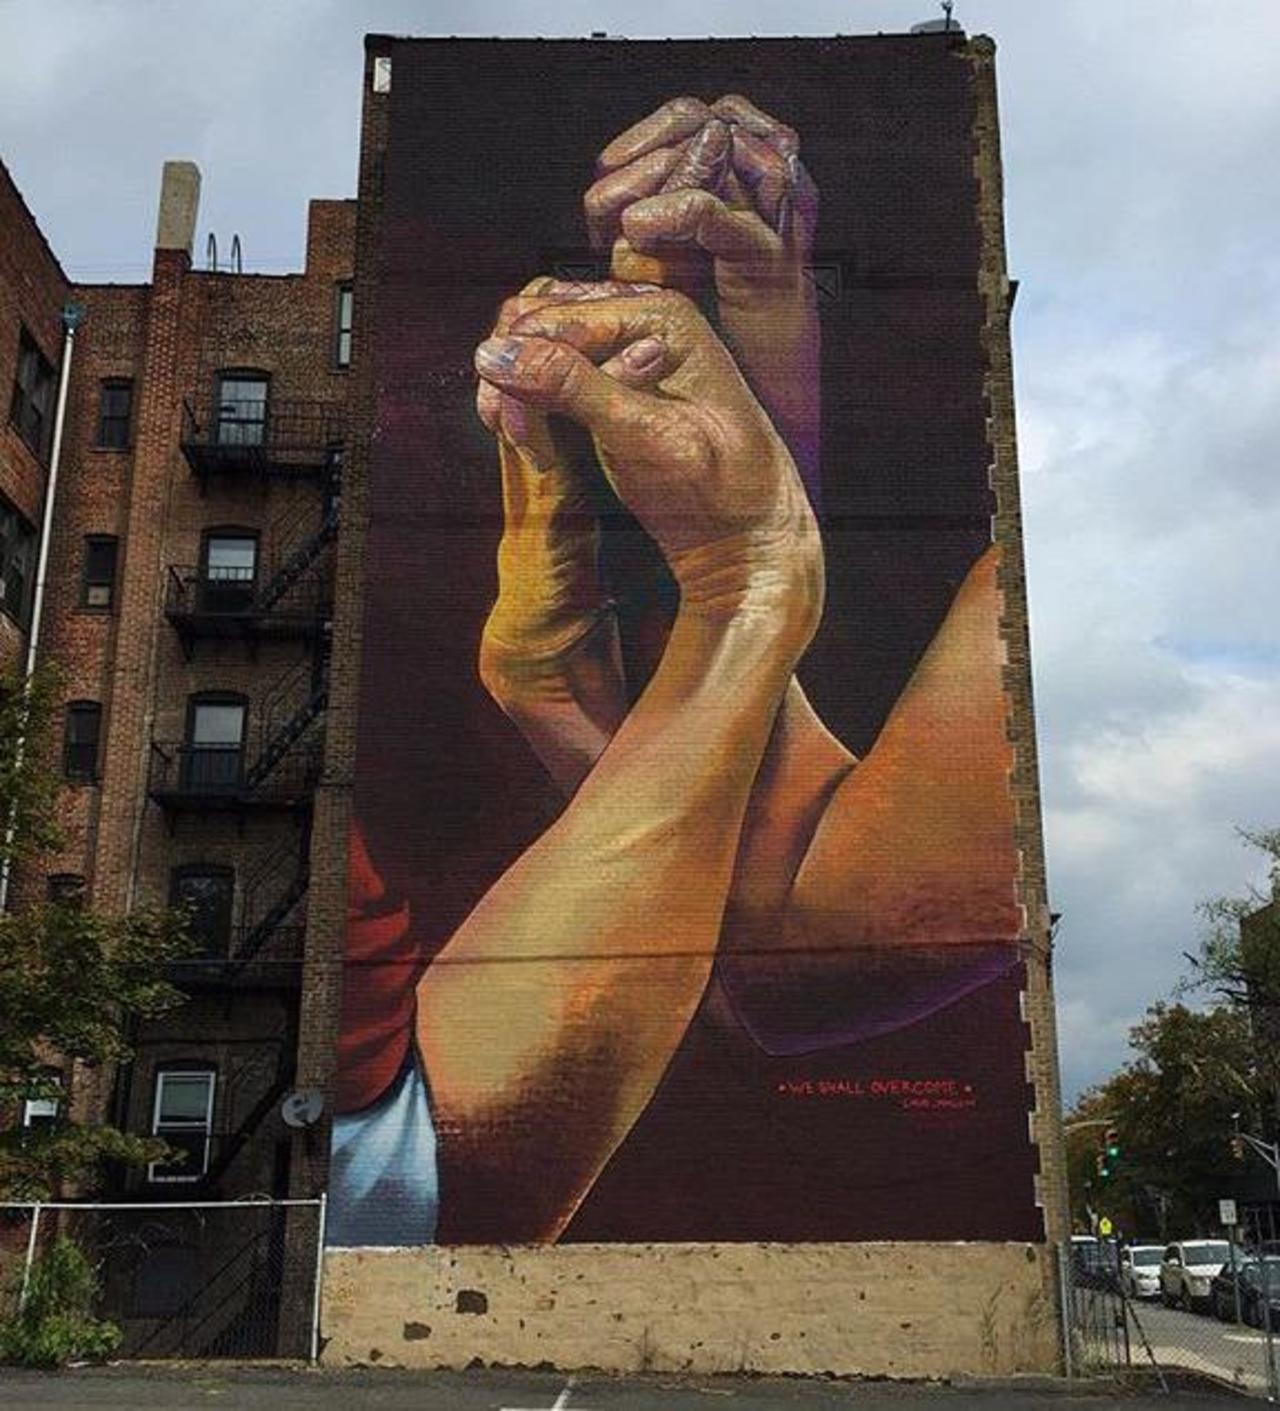 New Street Art by CaseMaclaim in Jersey City for the TheBKcollective 

#art #graffiti #mural #streetart http://t.co/7UB12uTskx